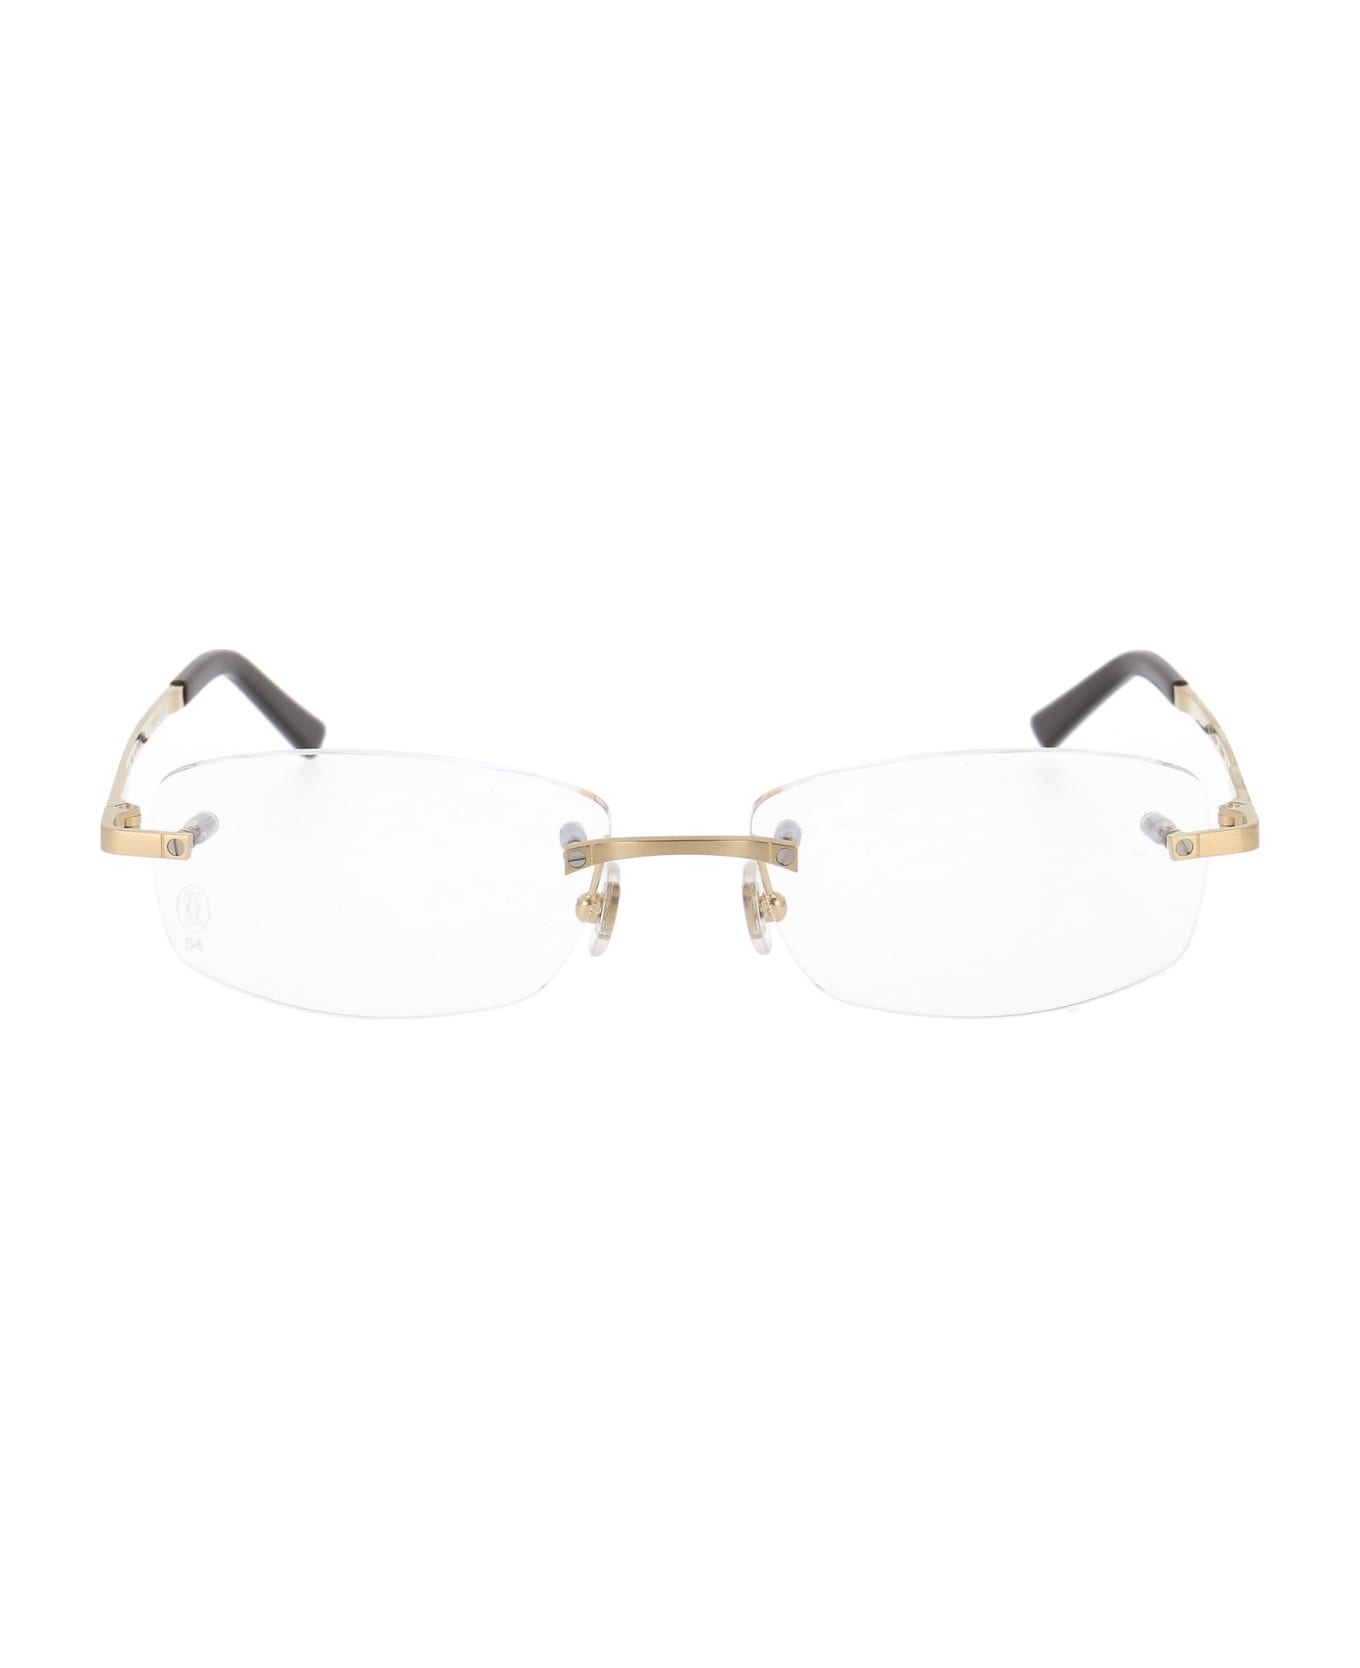 Cartier Eyewear Ct0086o Glasses - 001 GOLD GOLD TRANSPARENT